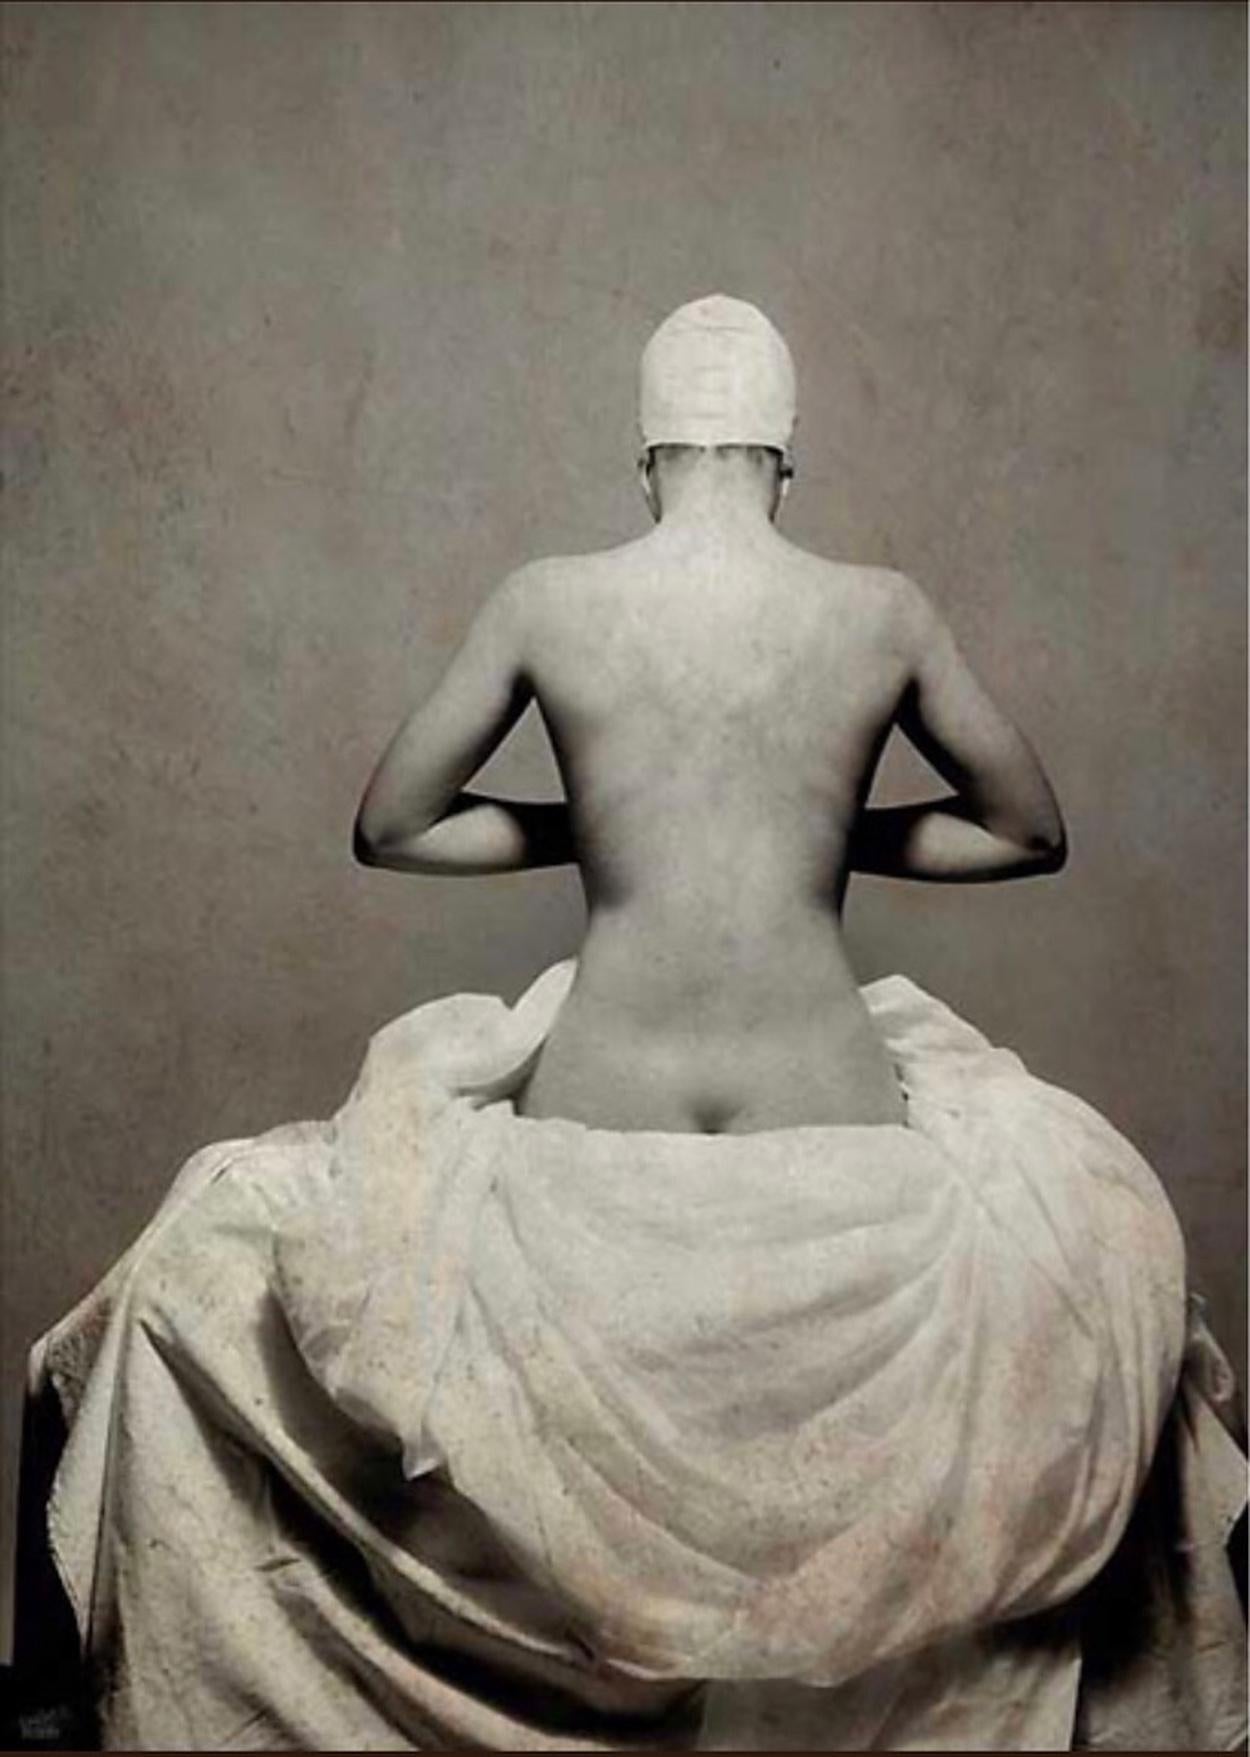 Vladimir Clavijo-Telepnev Nude Photograph - "Sensuality 1" Print 37" x 26" inch Edition of 15 by VLADIMIR CLAVIJO-TELEPNEV 